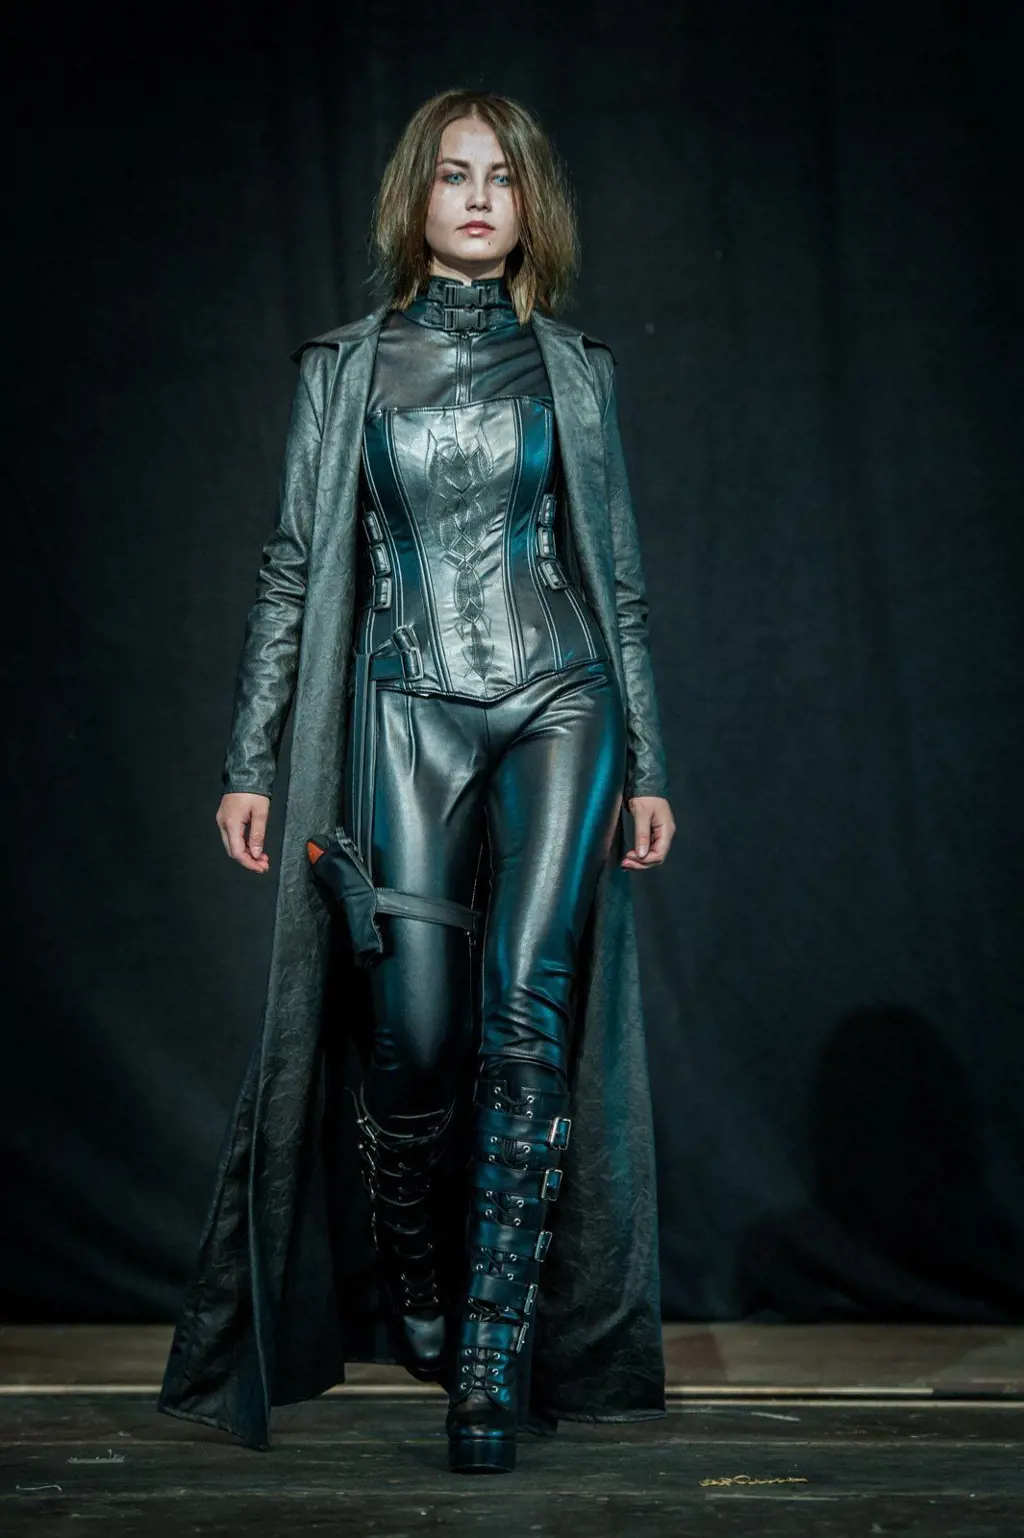 Creative Halloween Costume Ideas For A Leather Dress | ShunVogue